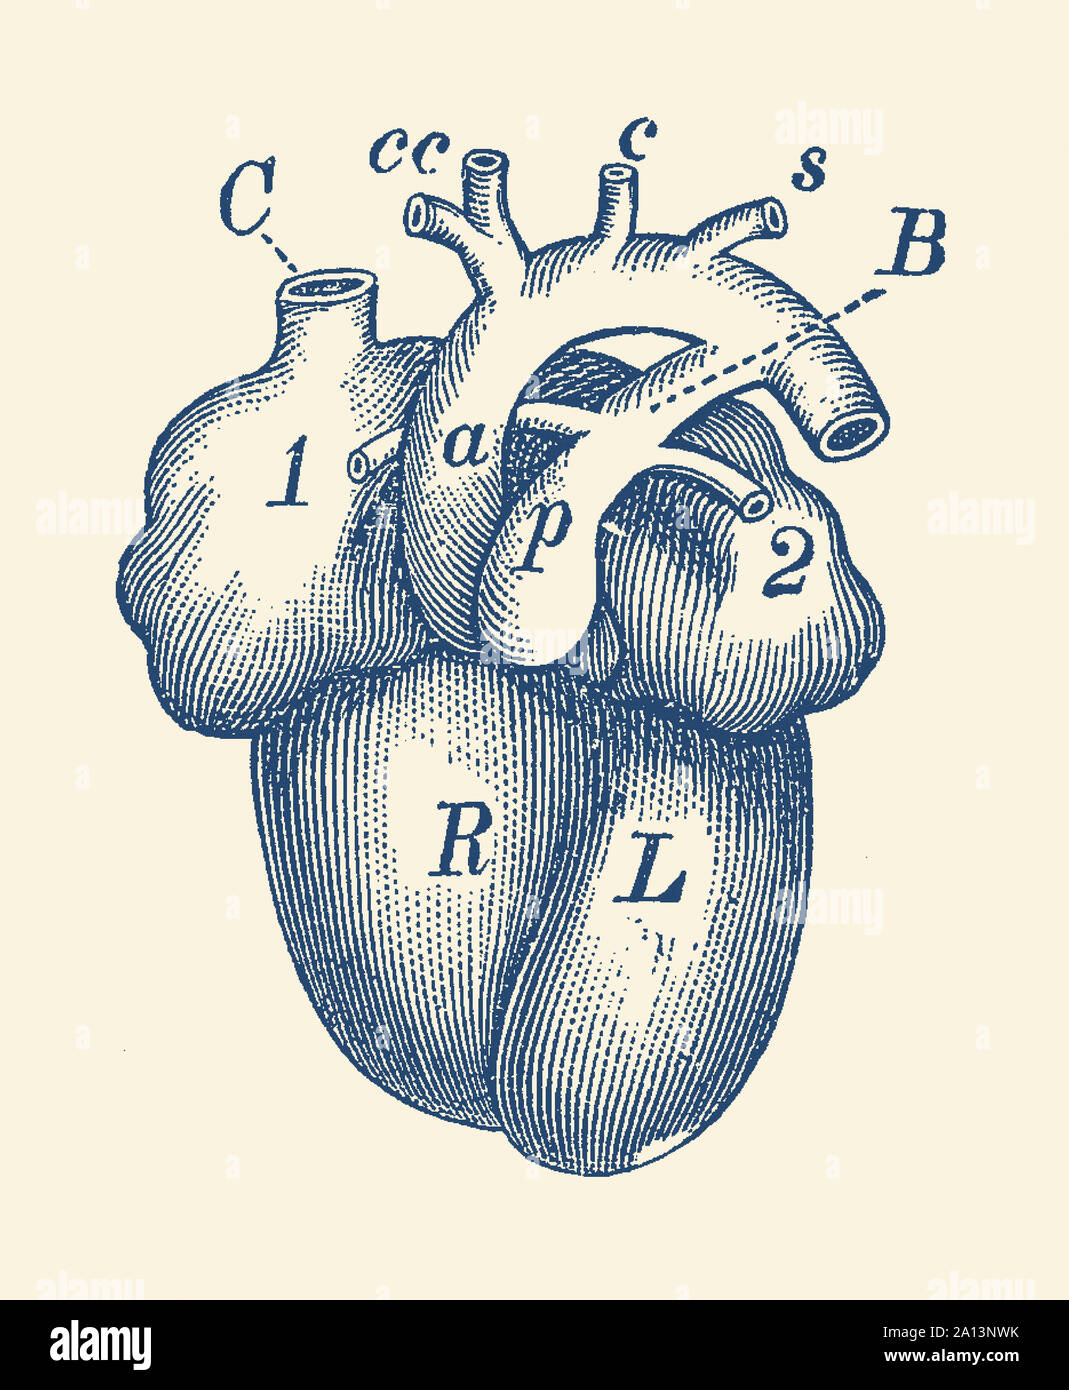 Vintage anatomy print of the human heart. Stock Photo